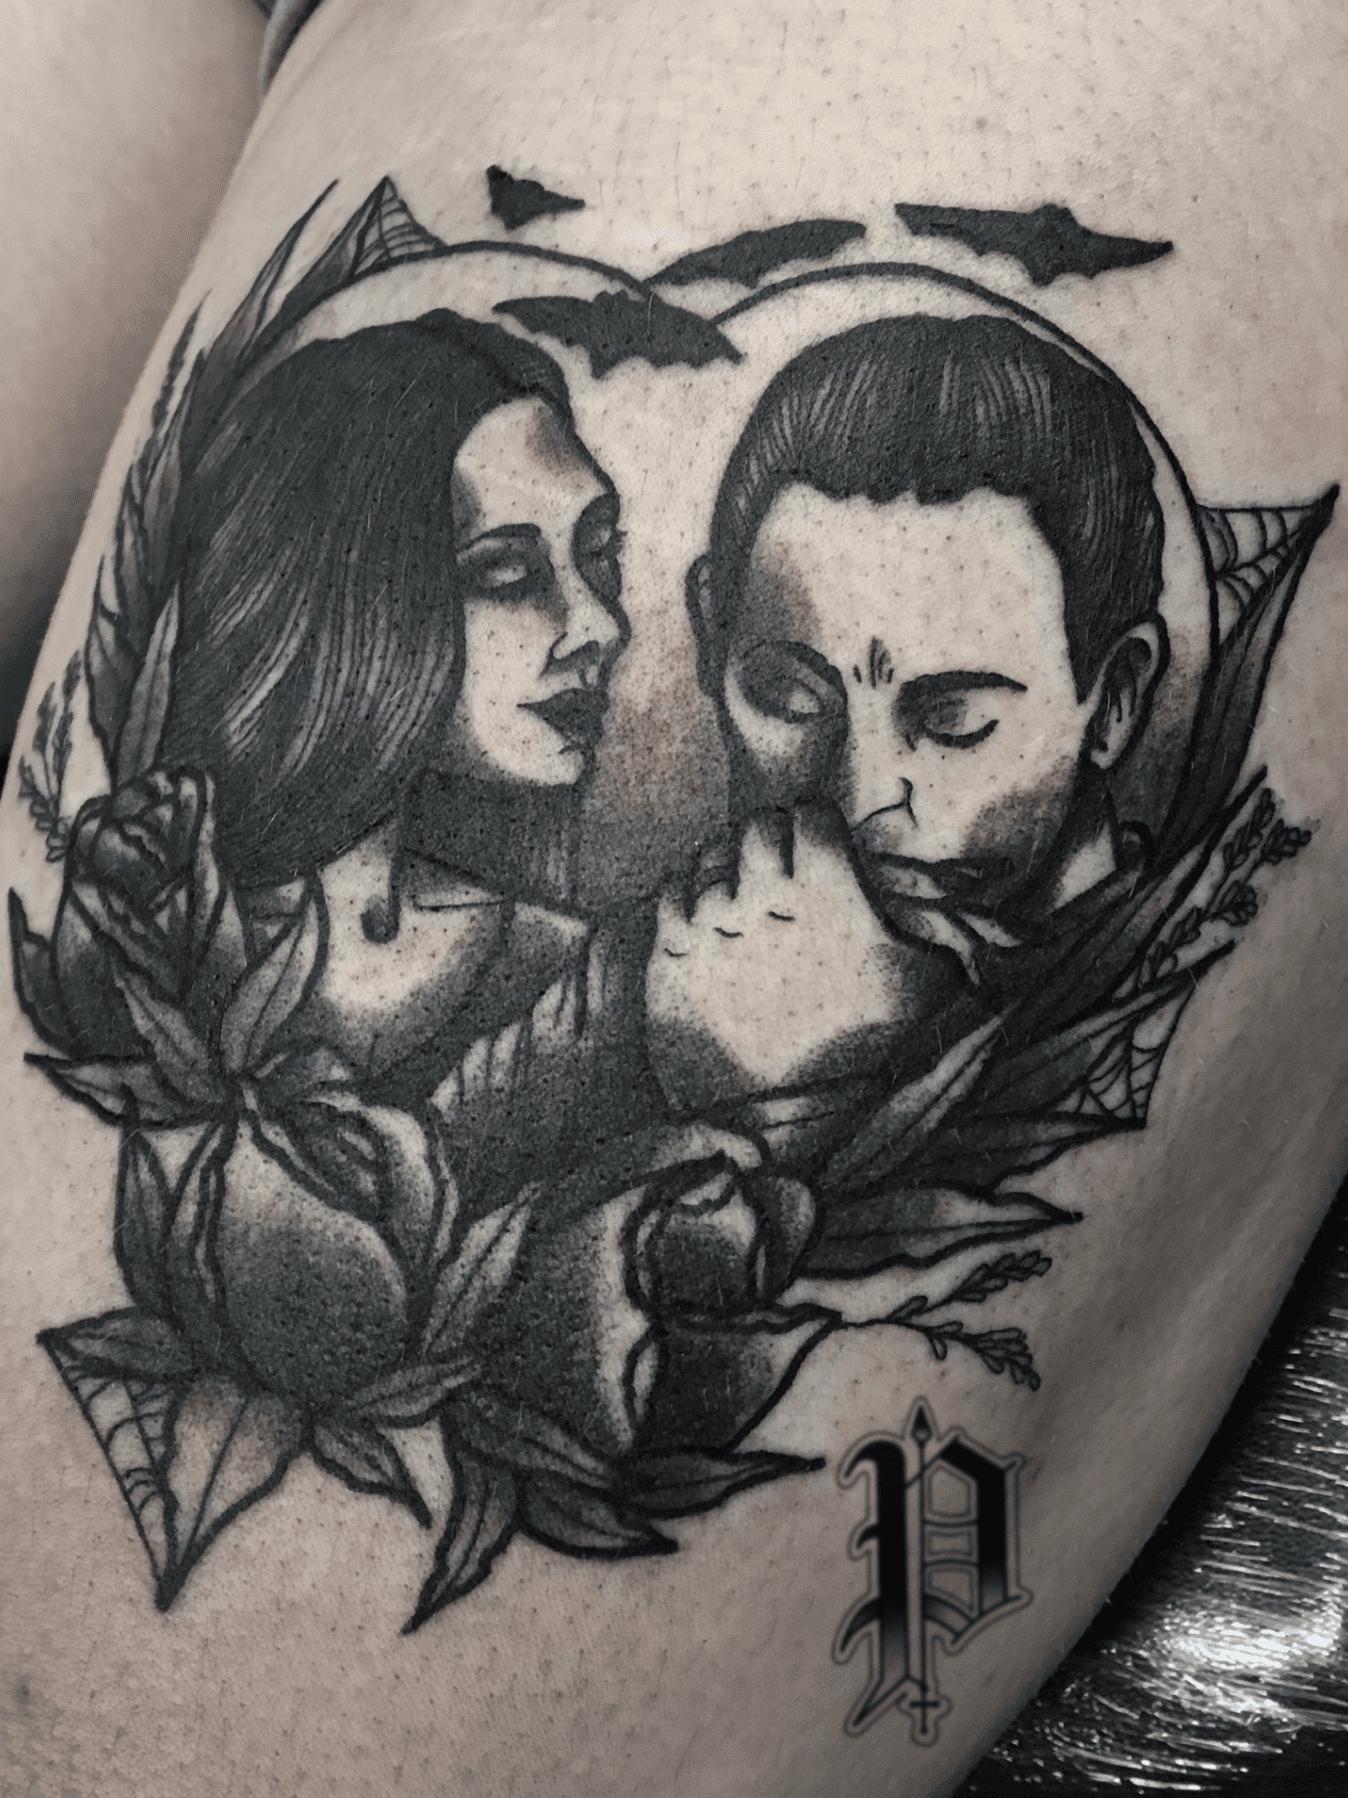 Addams Family Tattoos  All Things Tattoo